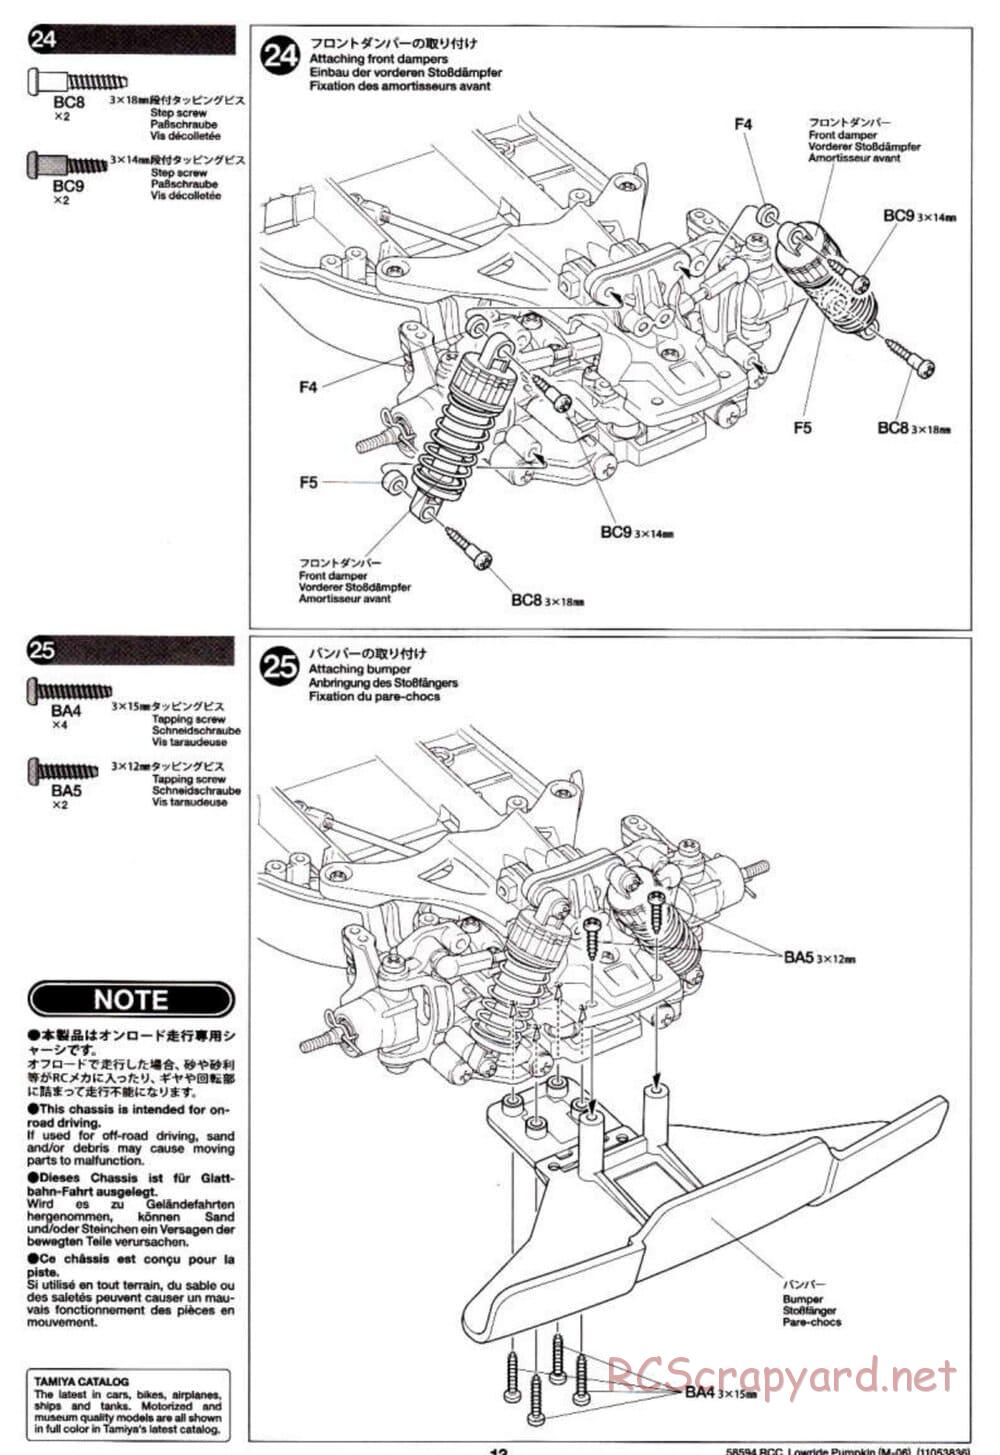 Tamiya - Lowride Pumpkin - M-06 Chassis - Manual - Page 13